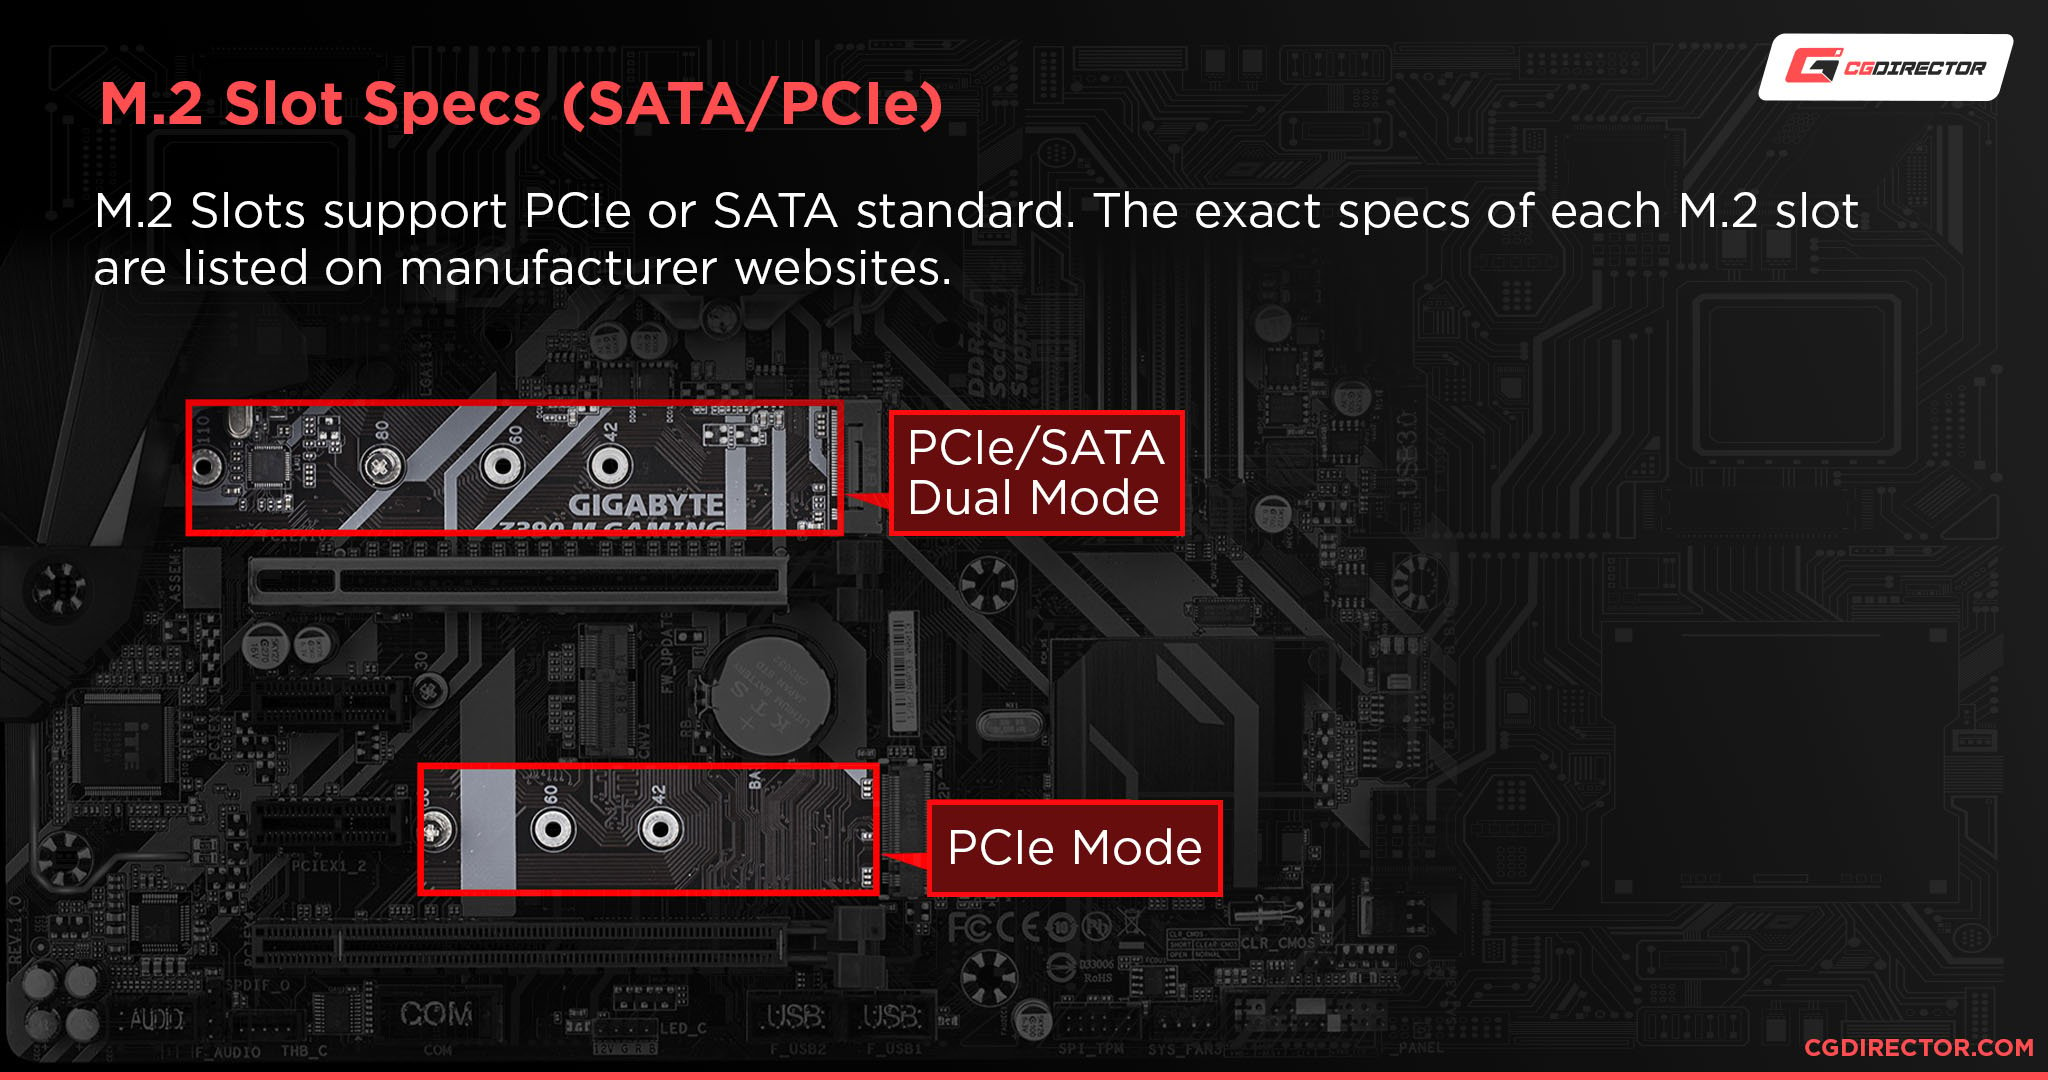 M.2 Slot Specs (SATA and PCIe)